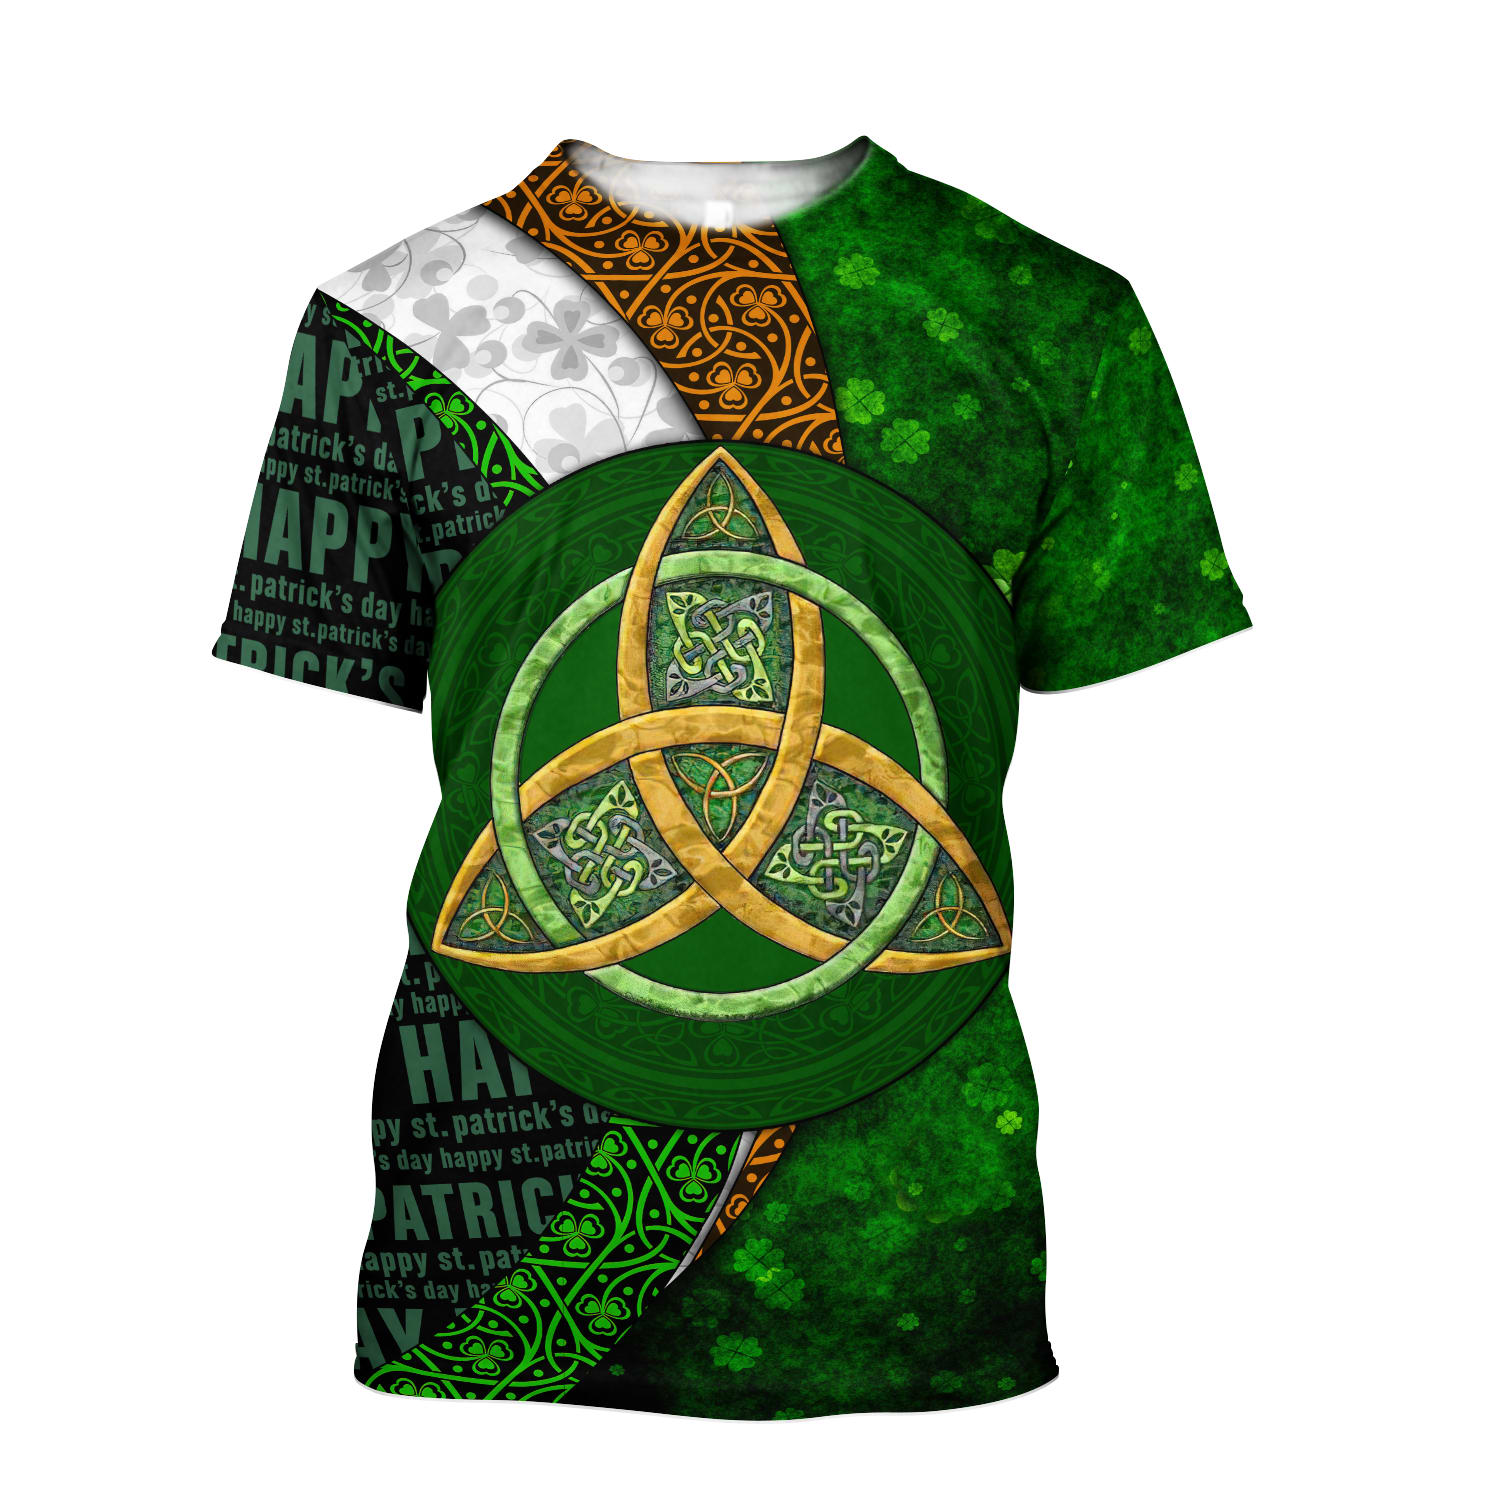 Irish Saint Patrick's Day Printed Unisex Shirts for Mens & Women 3d T Shirts - St Patricks Day 3D Shirts